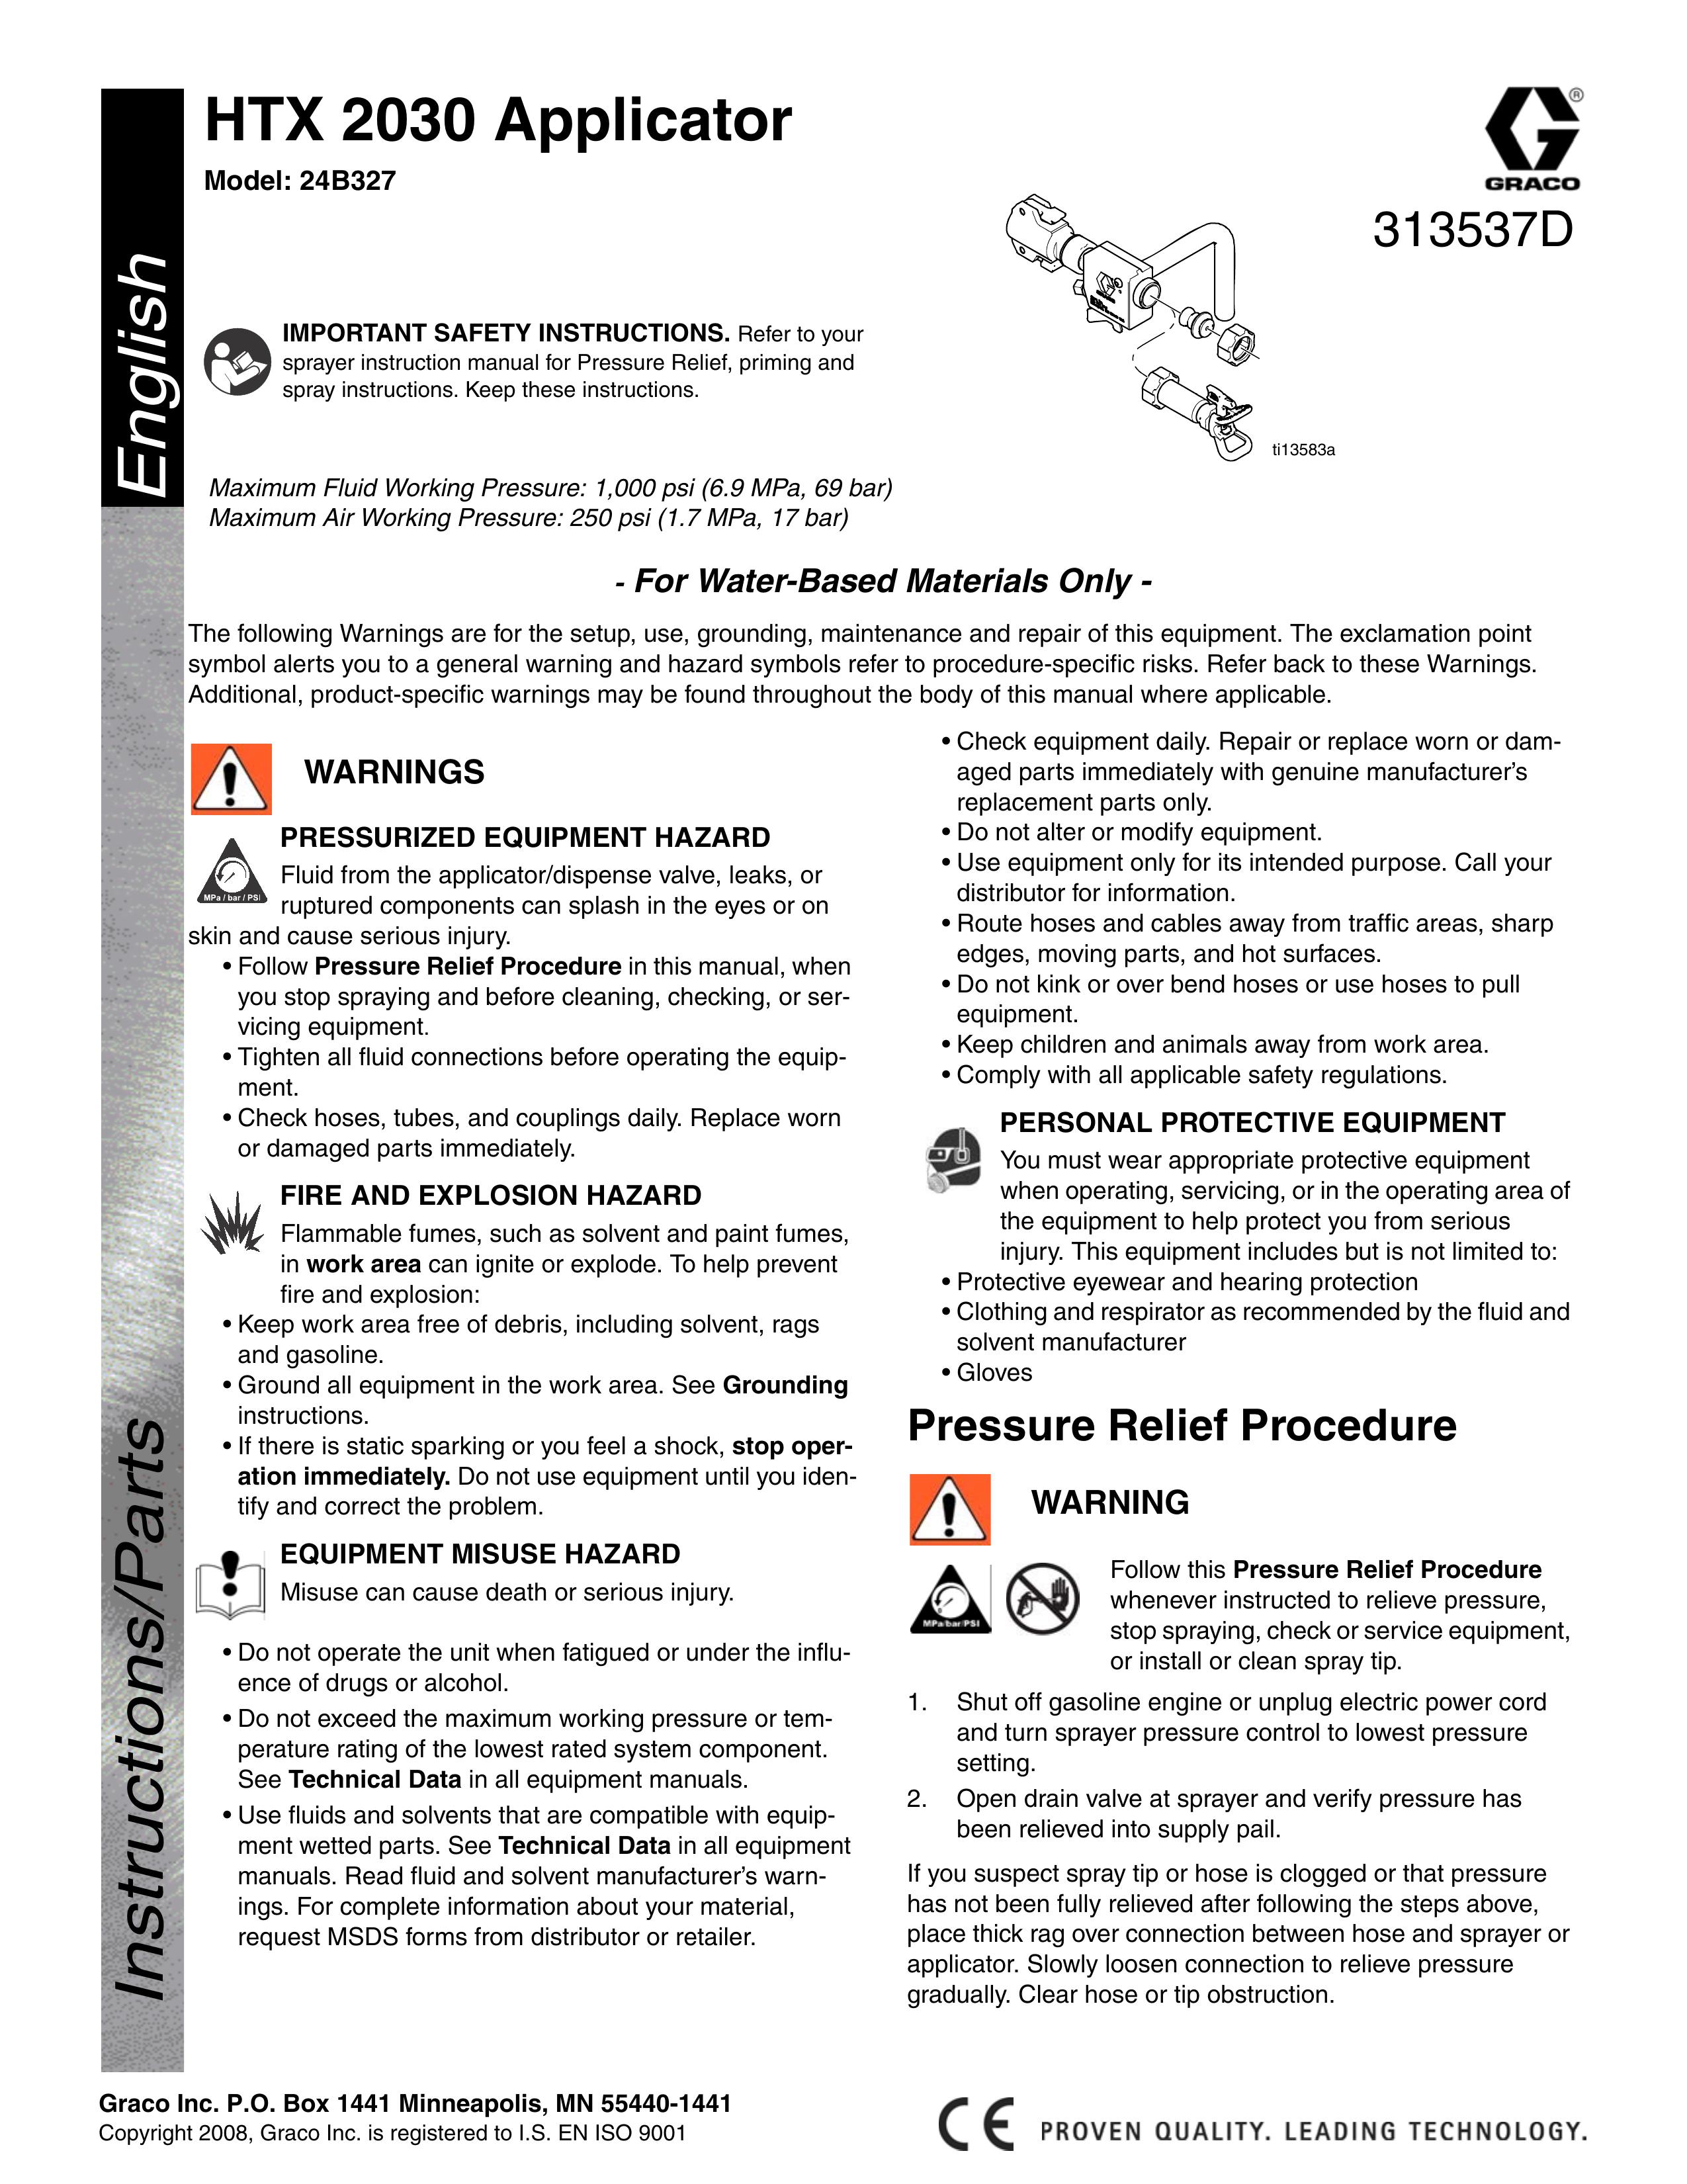 Graco 24B327 Sleep Apnea Machine User Manual